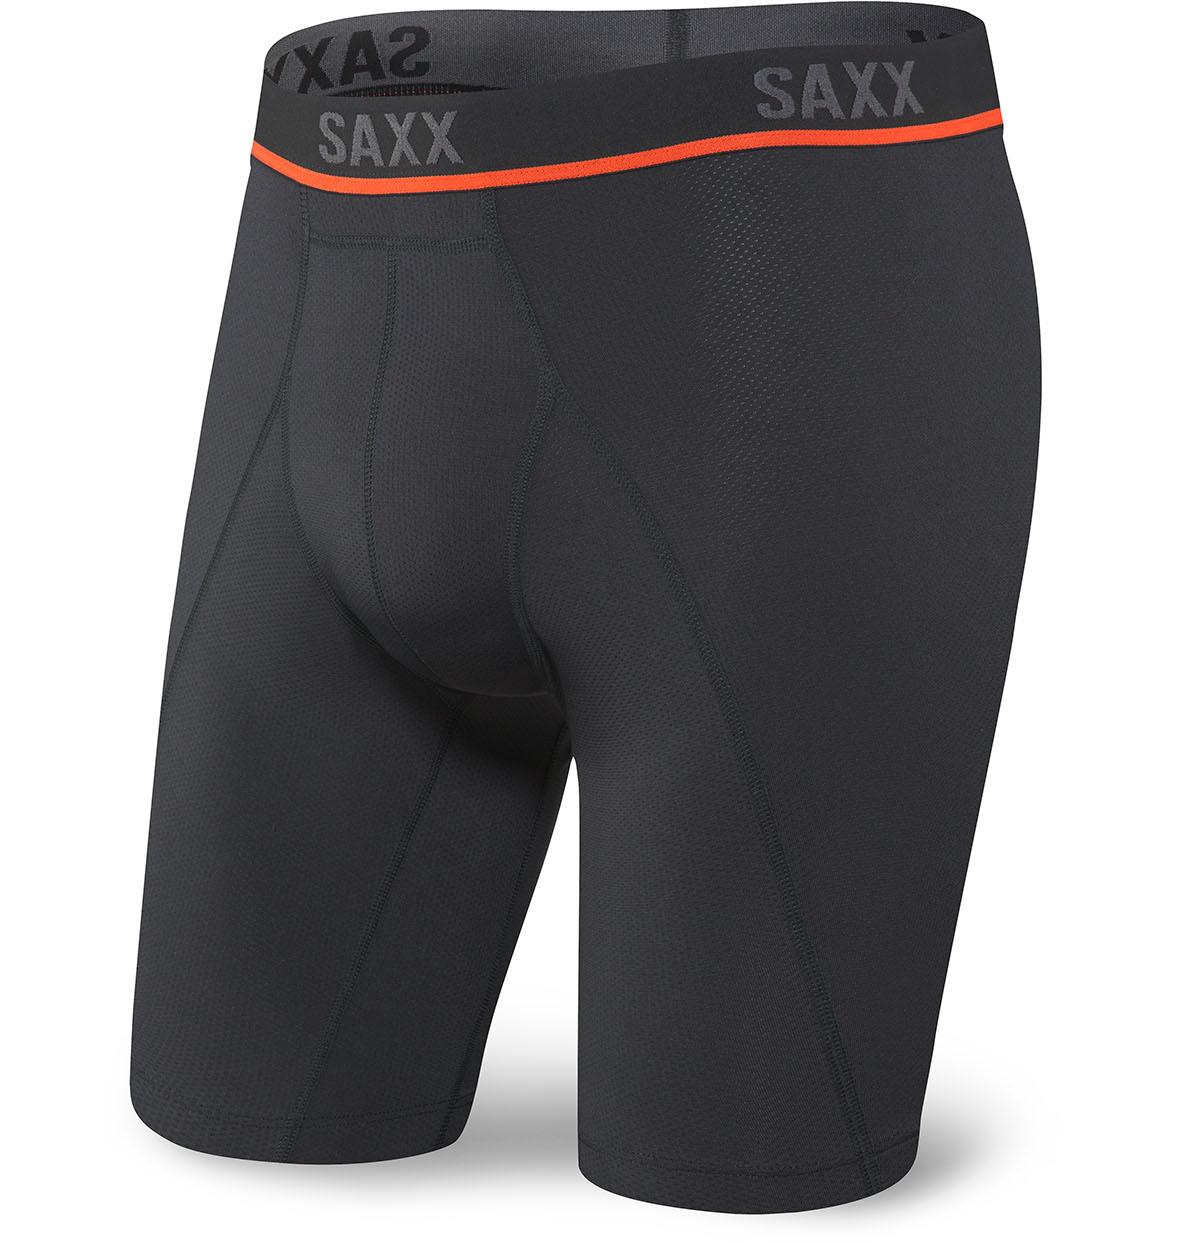 Saxx Kinetic Hd Long Leg - Black